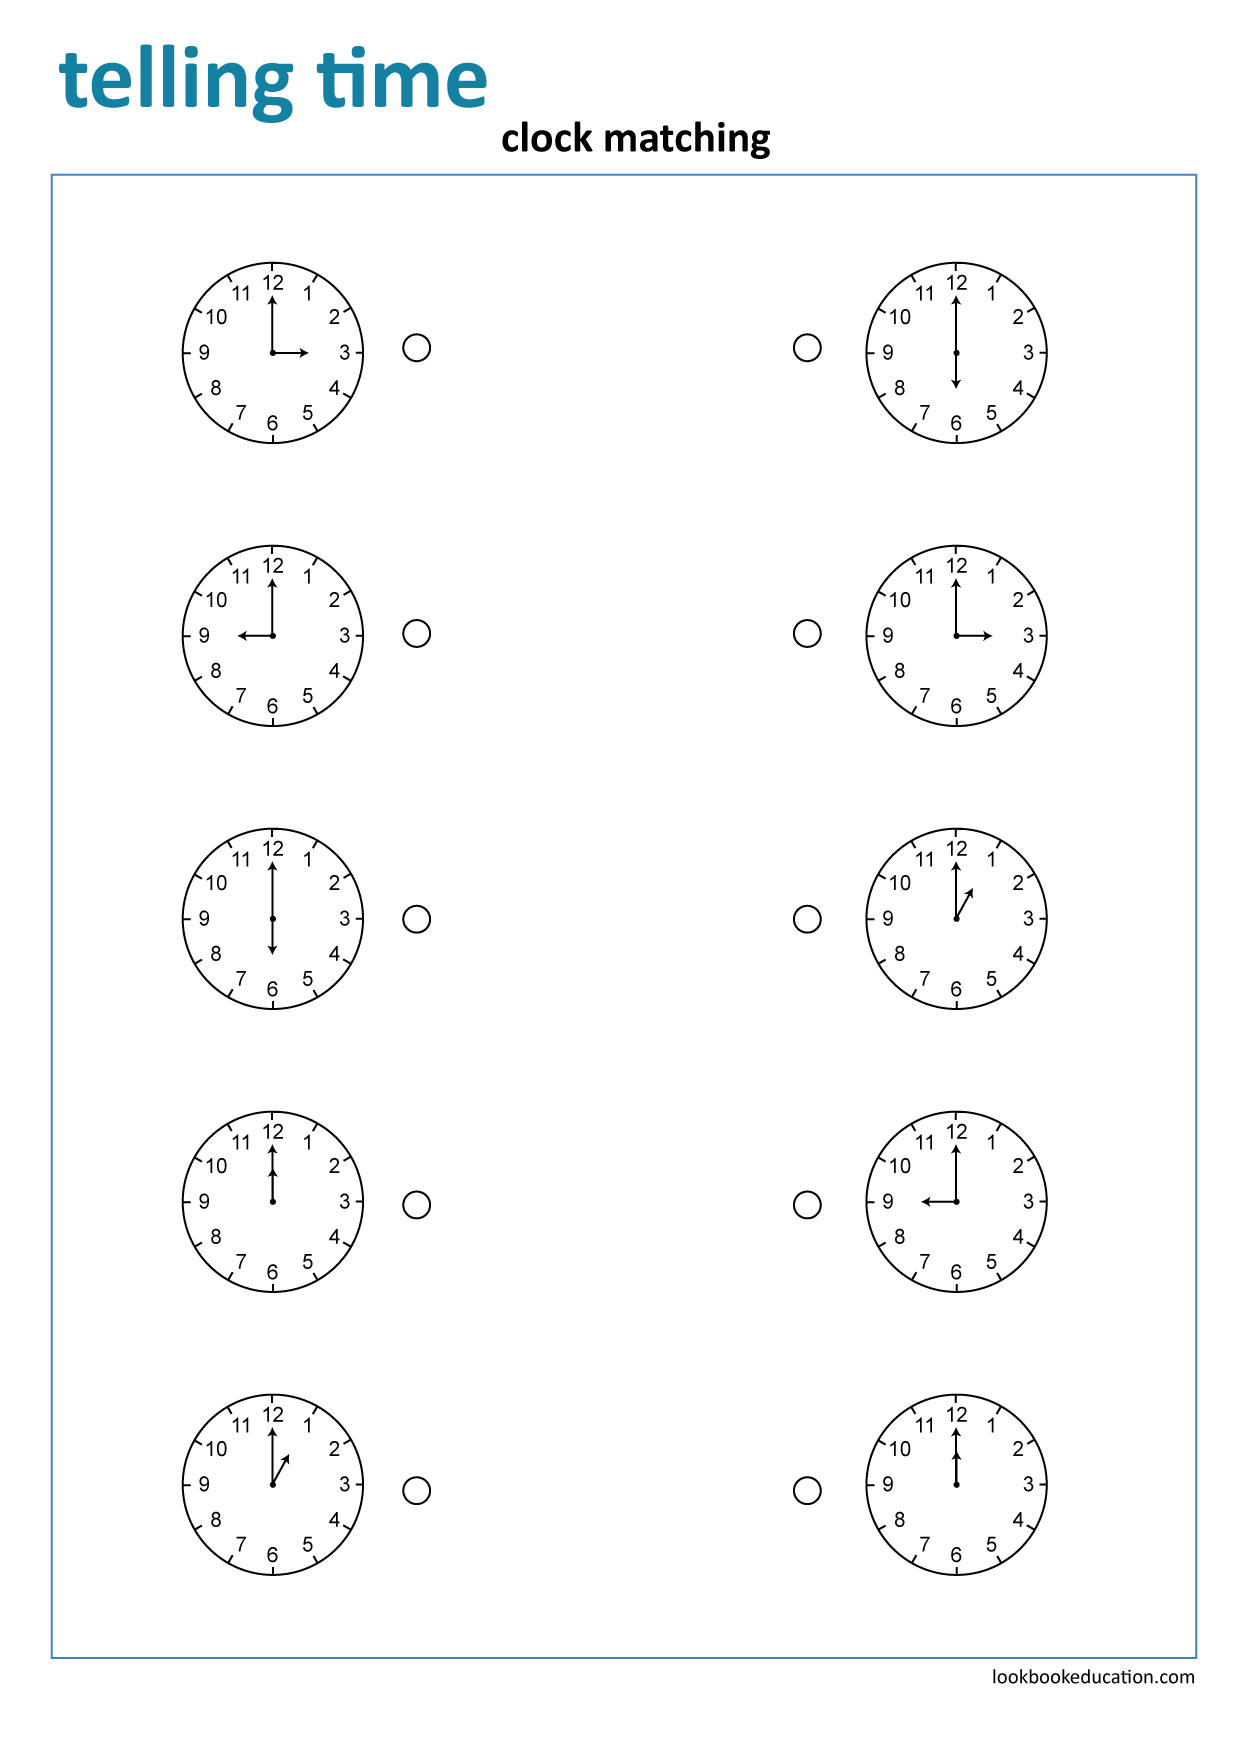 worksheet-matching-clocks-lookbook-education